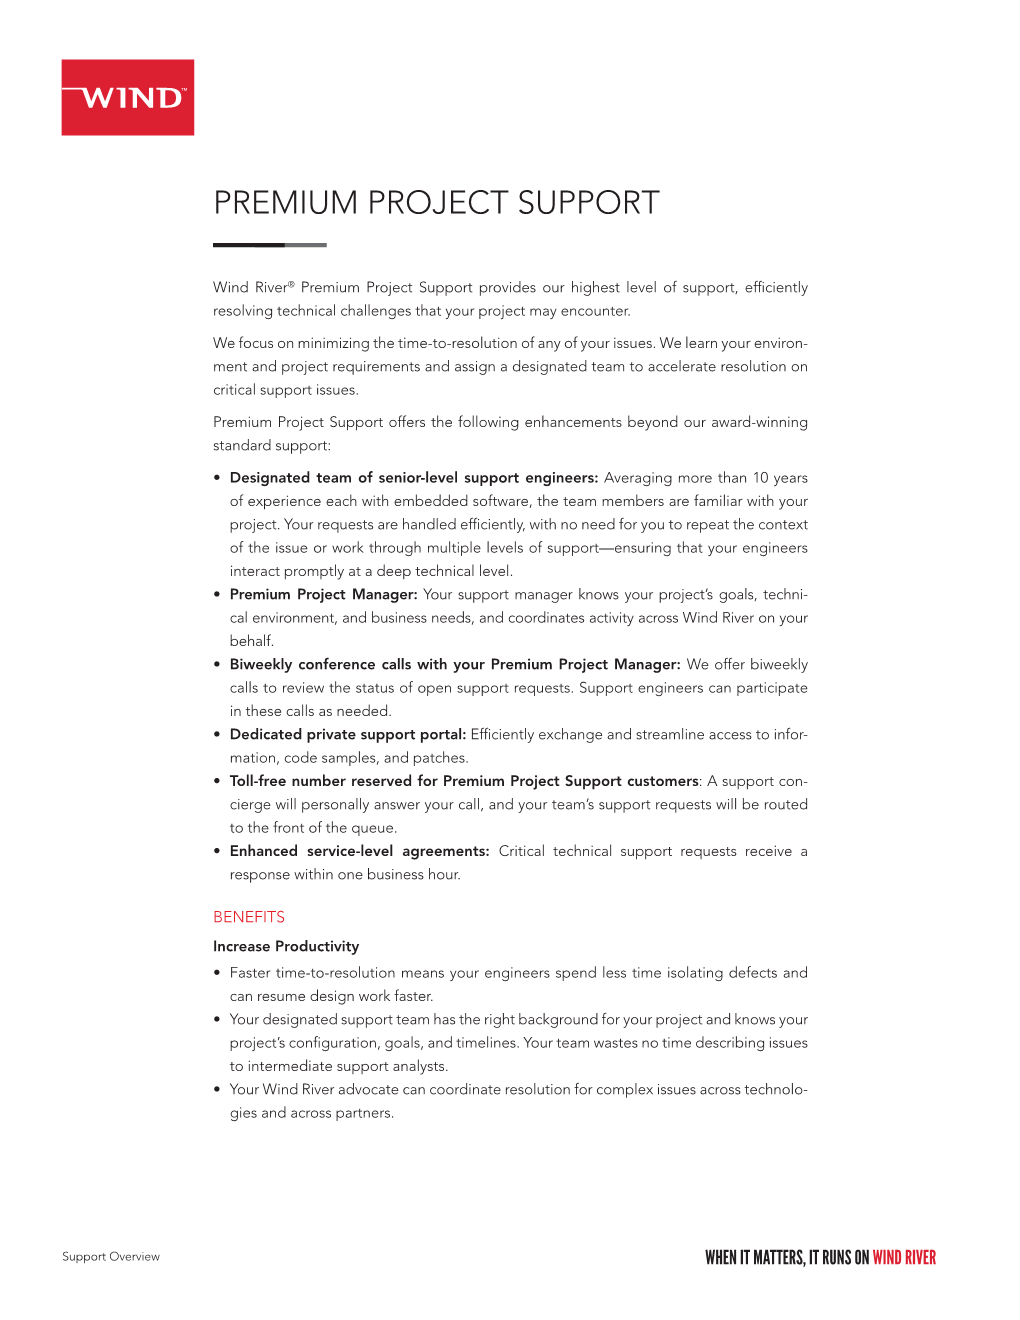 Premium Project Support